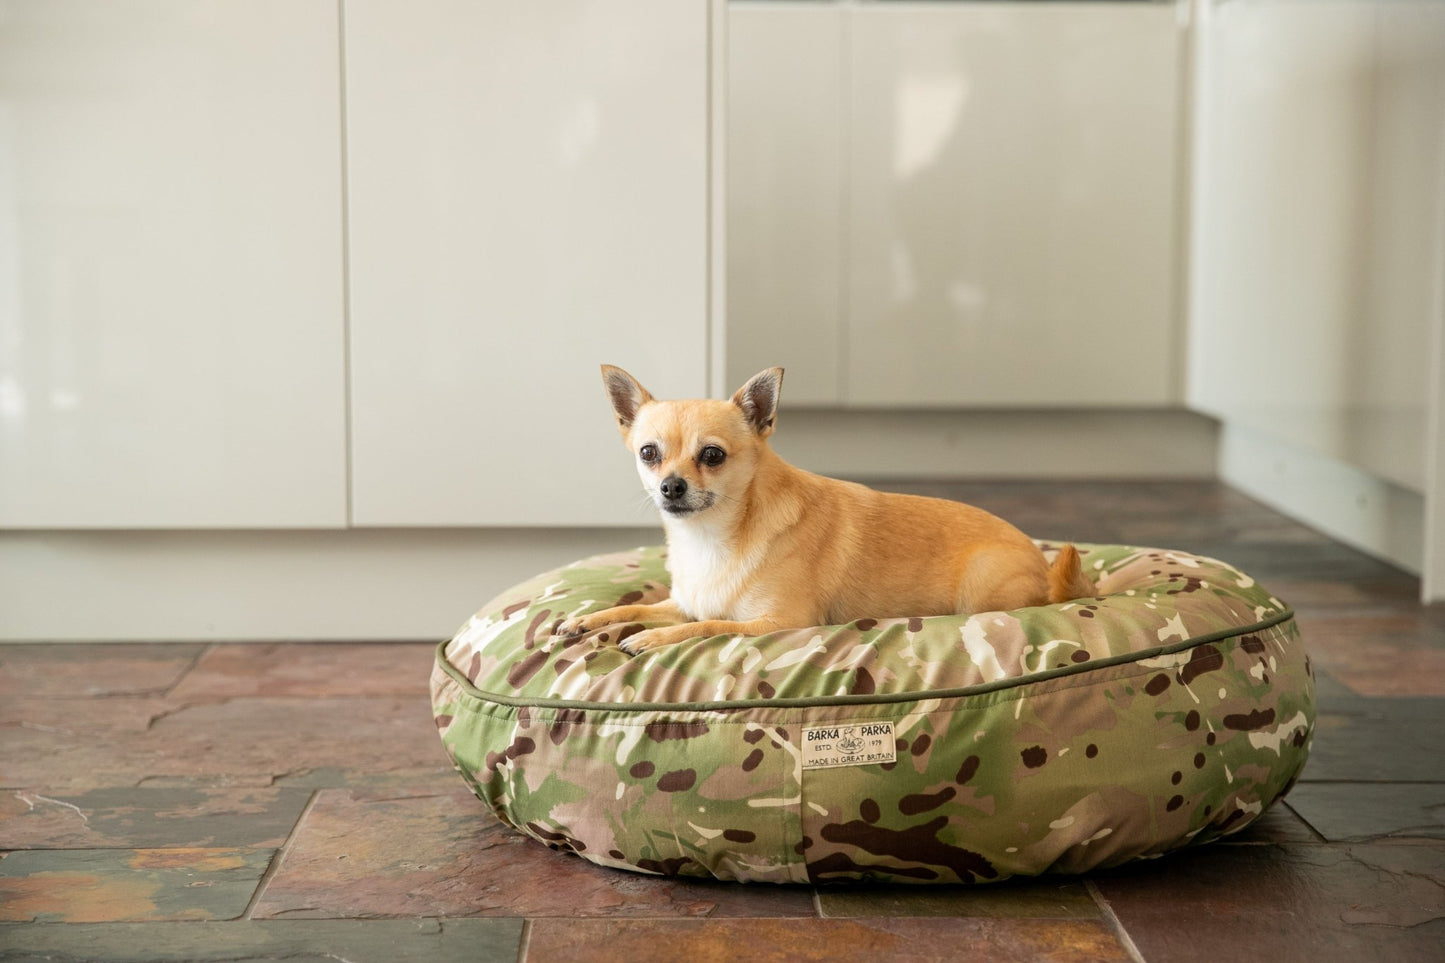 Barka Parka Dog Bed - Camo and olive piping - Barka Parka Dog Beds